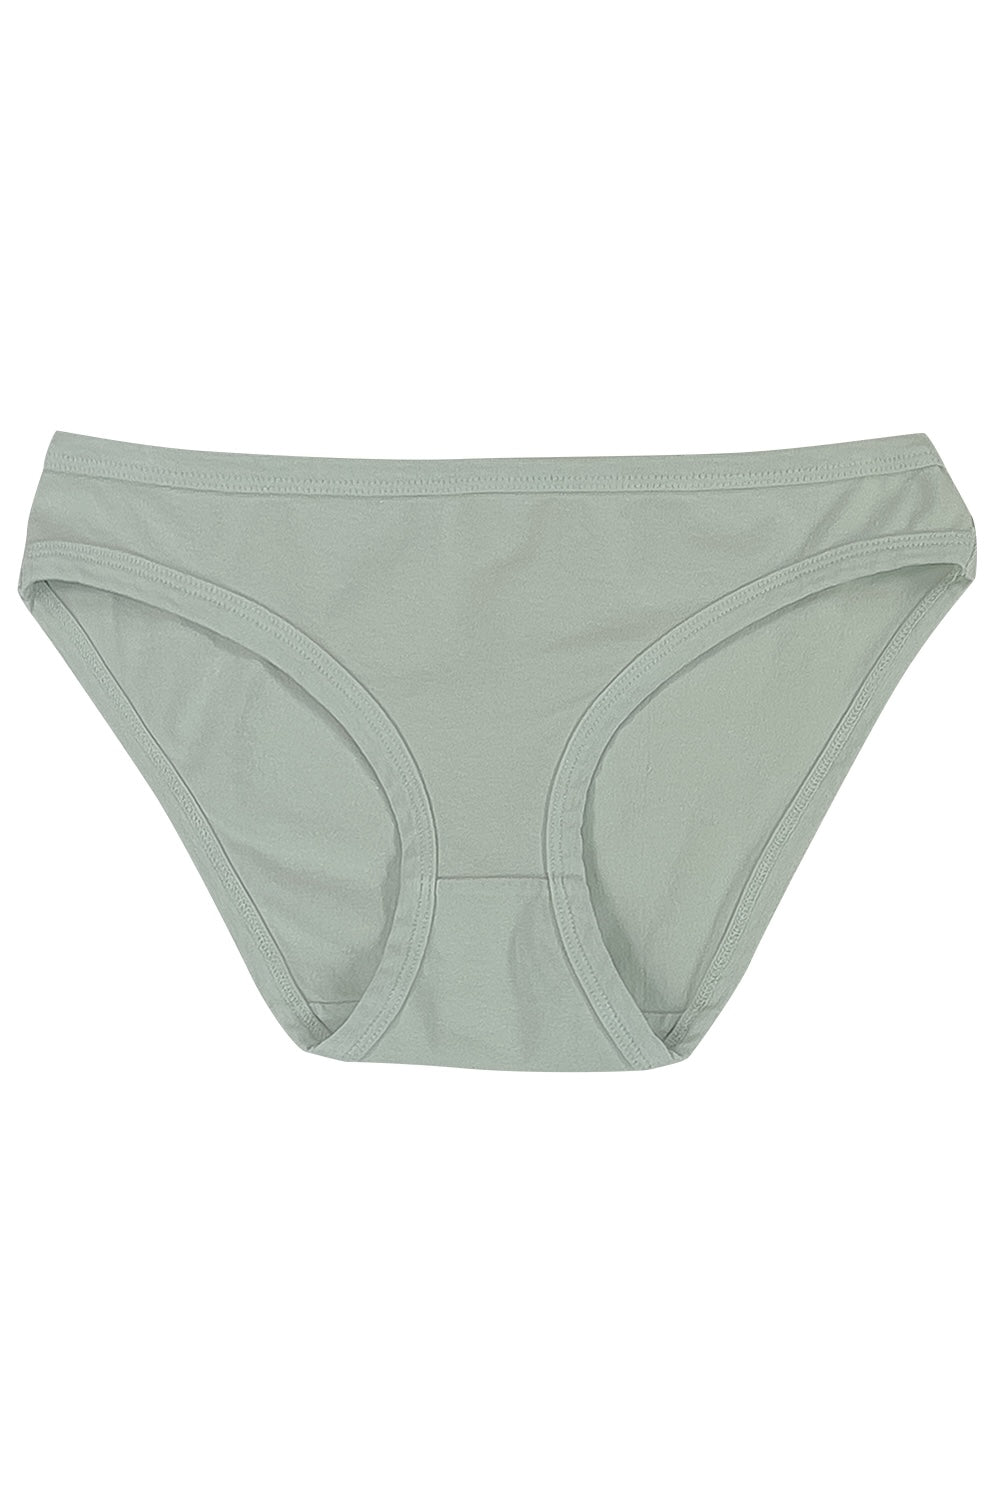 Bikini Brief | Jungmaven Hemp Clothing & Accessories / Color: Seafoam Green